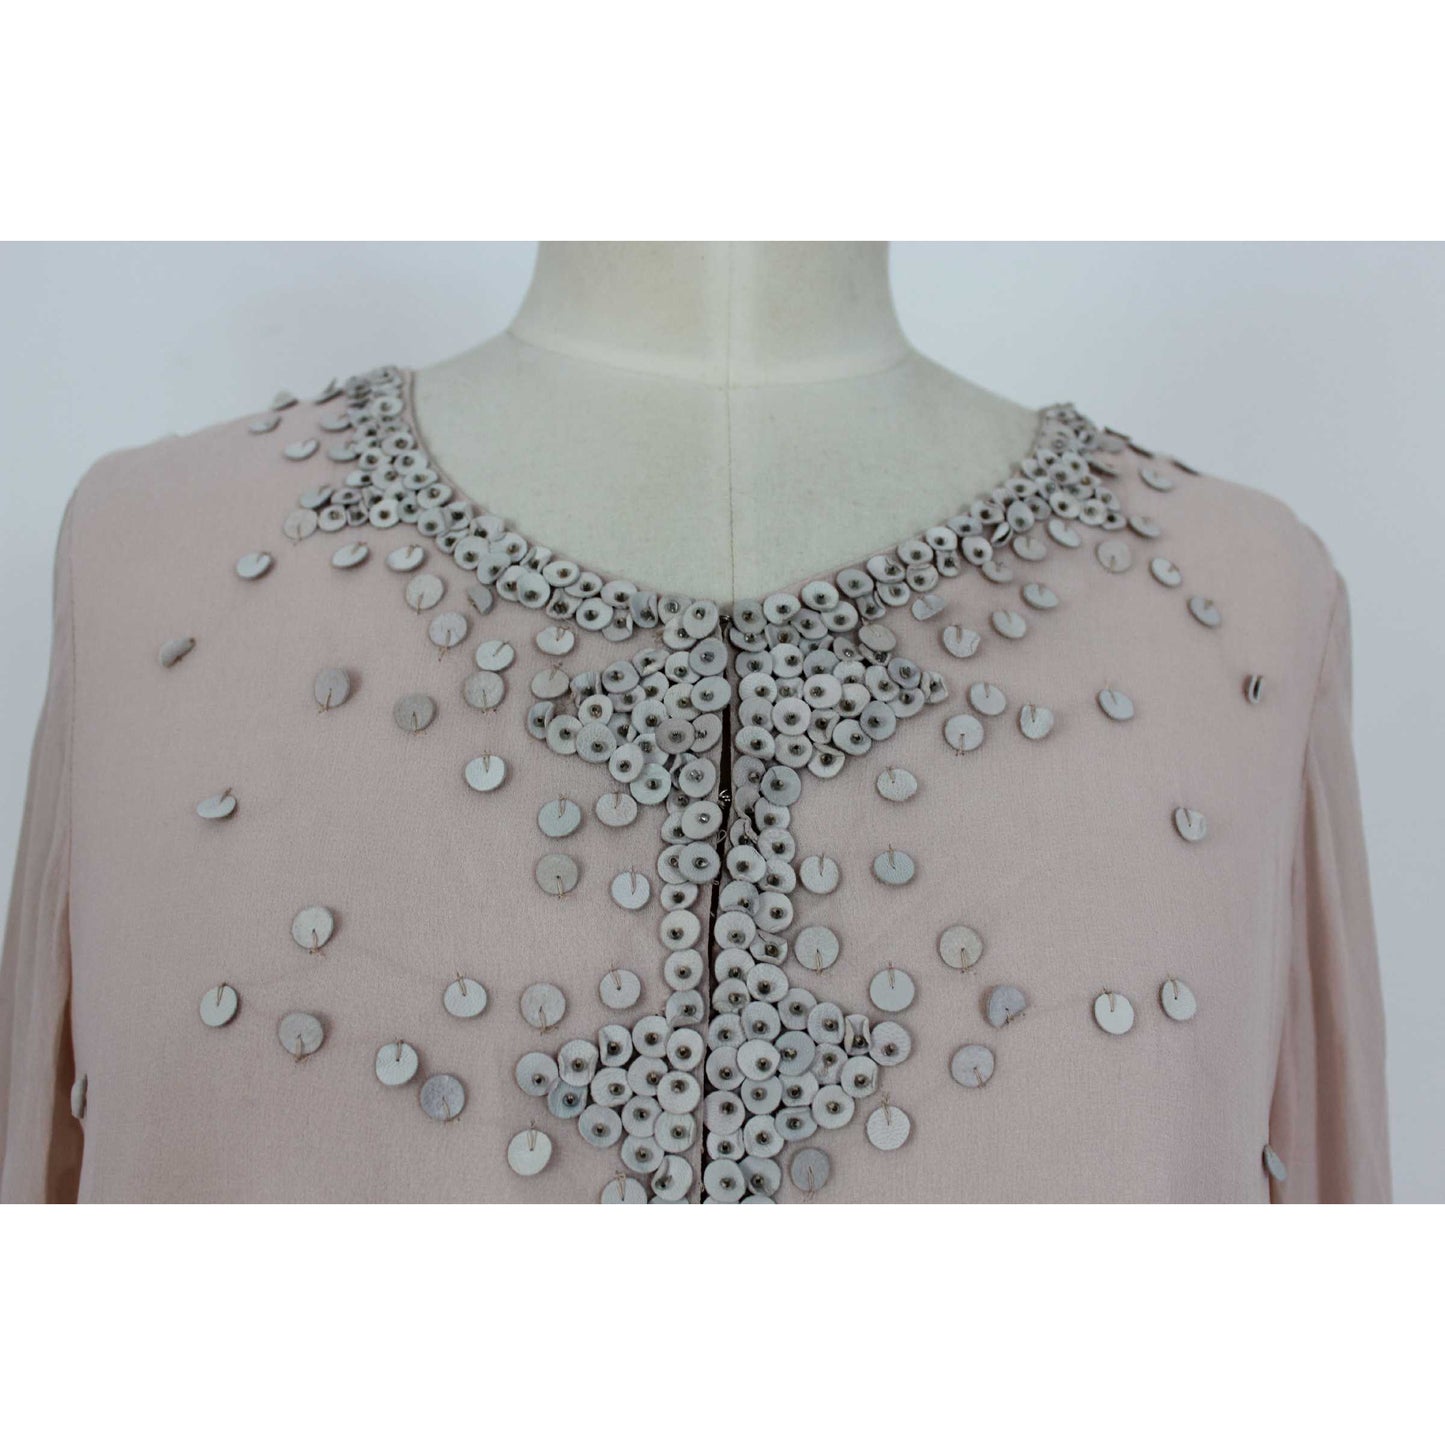 Antik Batik Pink Silk Leather Vintage Short Dress